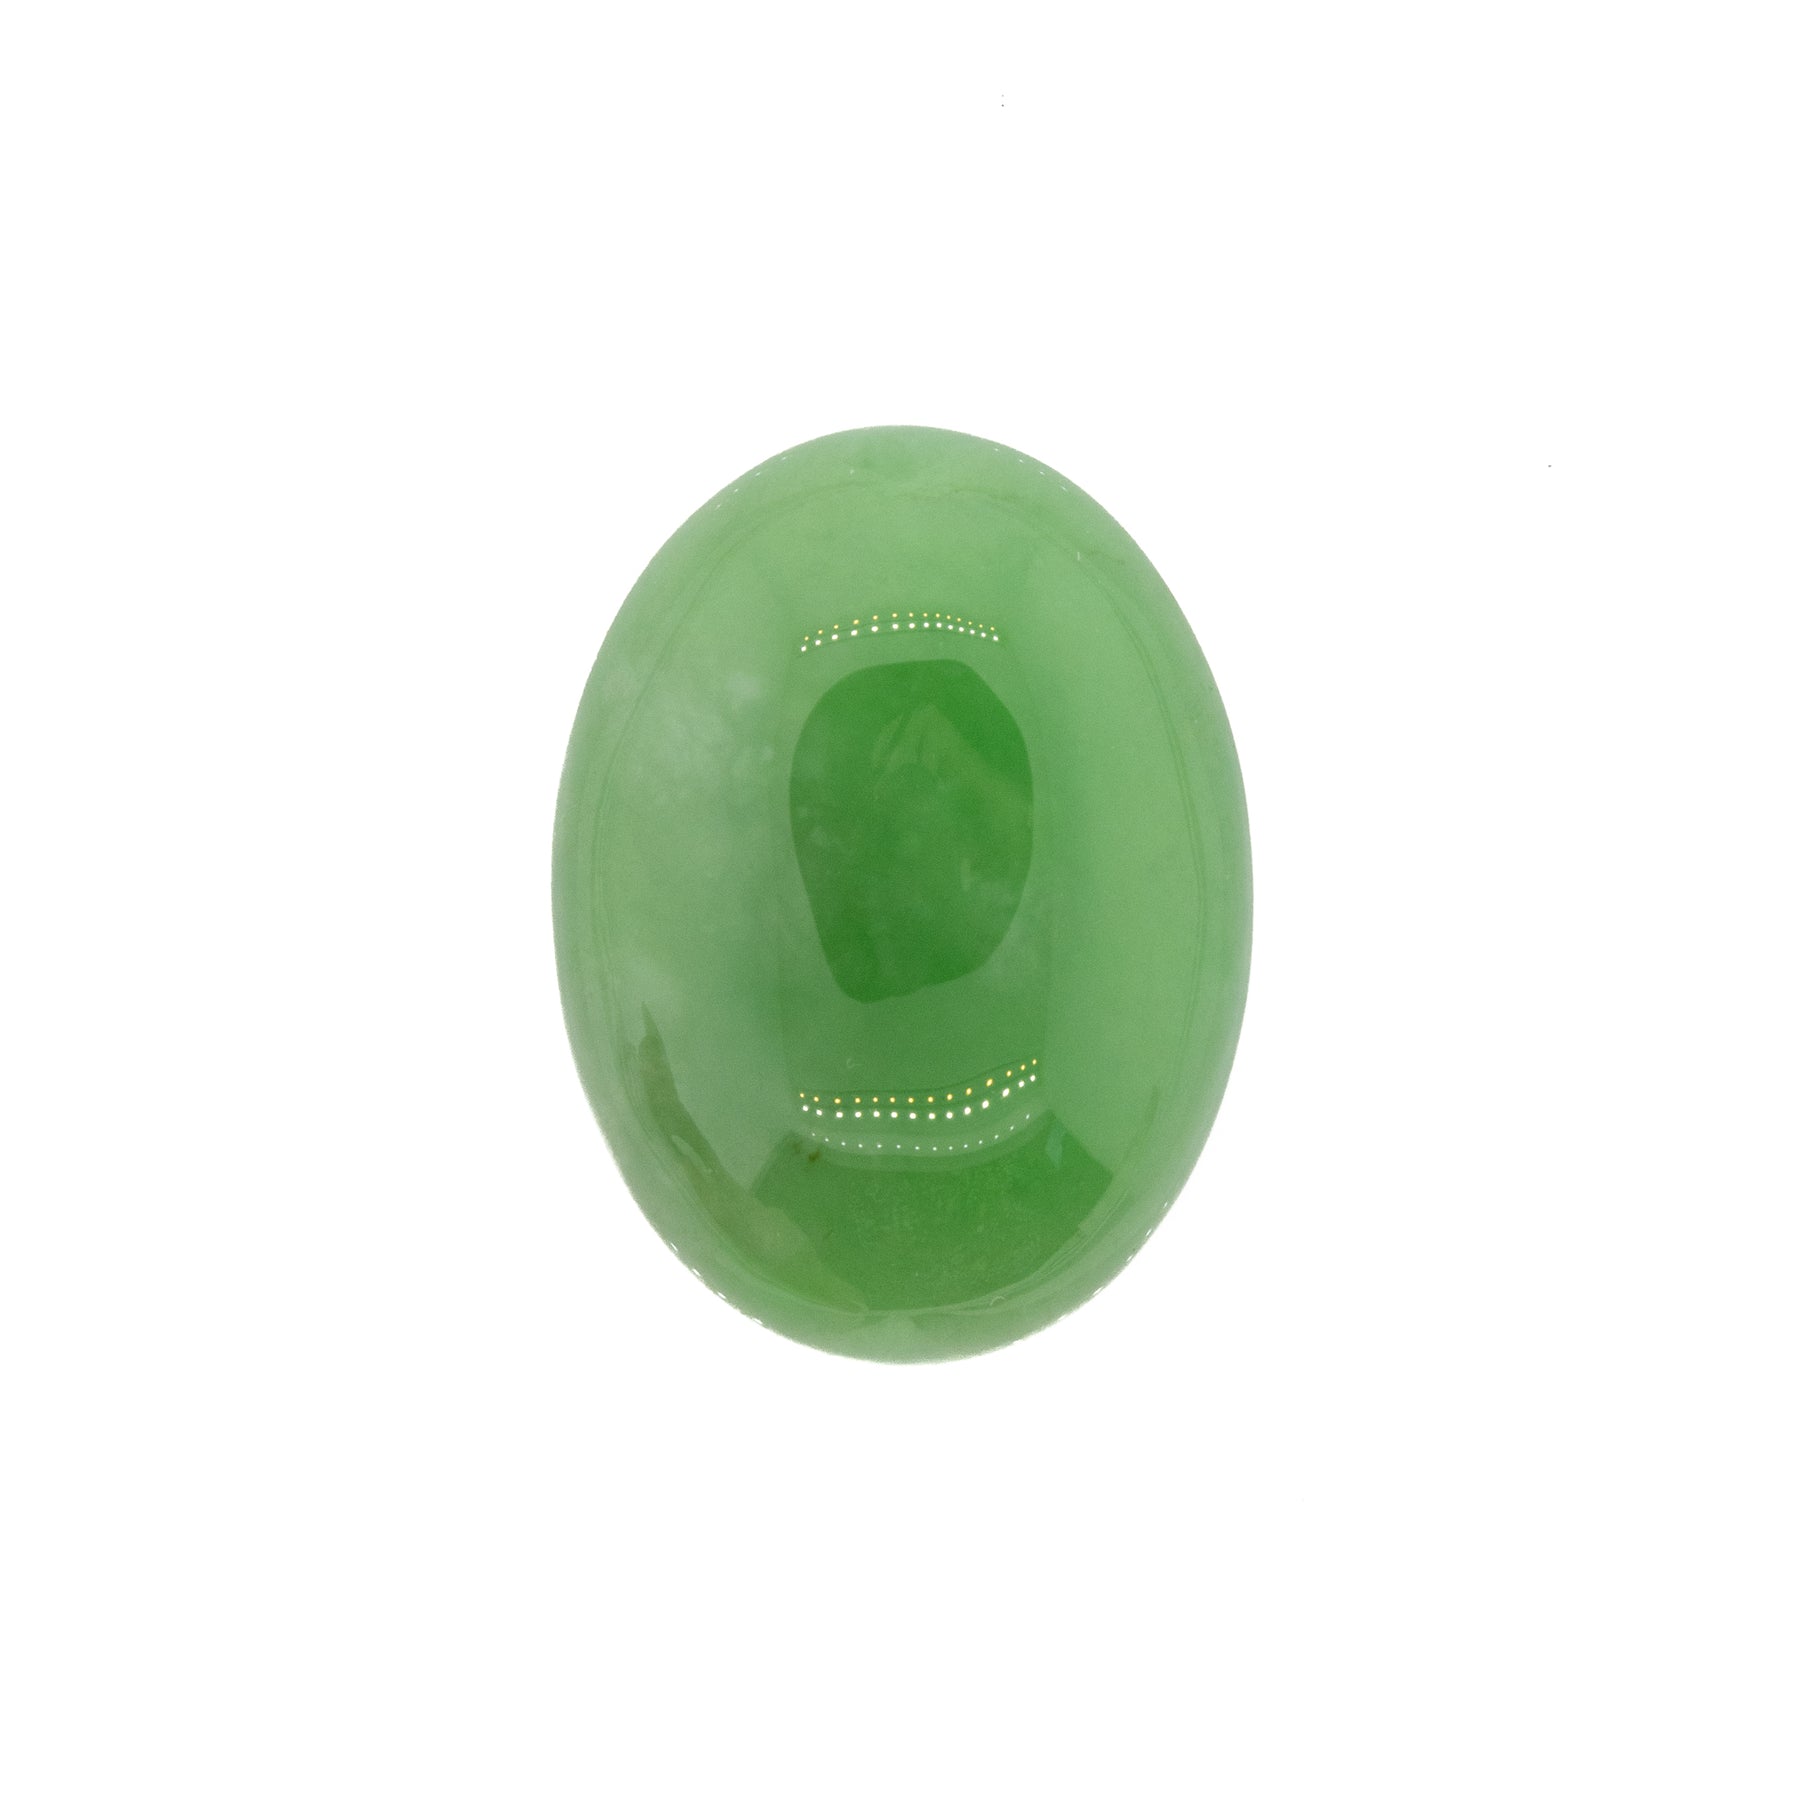 8.26ct Oval Cabochon Cut Mottled Apple Green Jadeite Jade